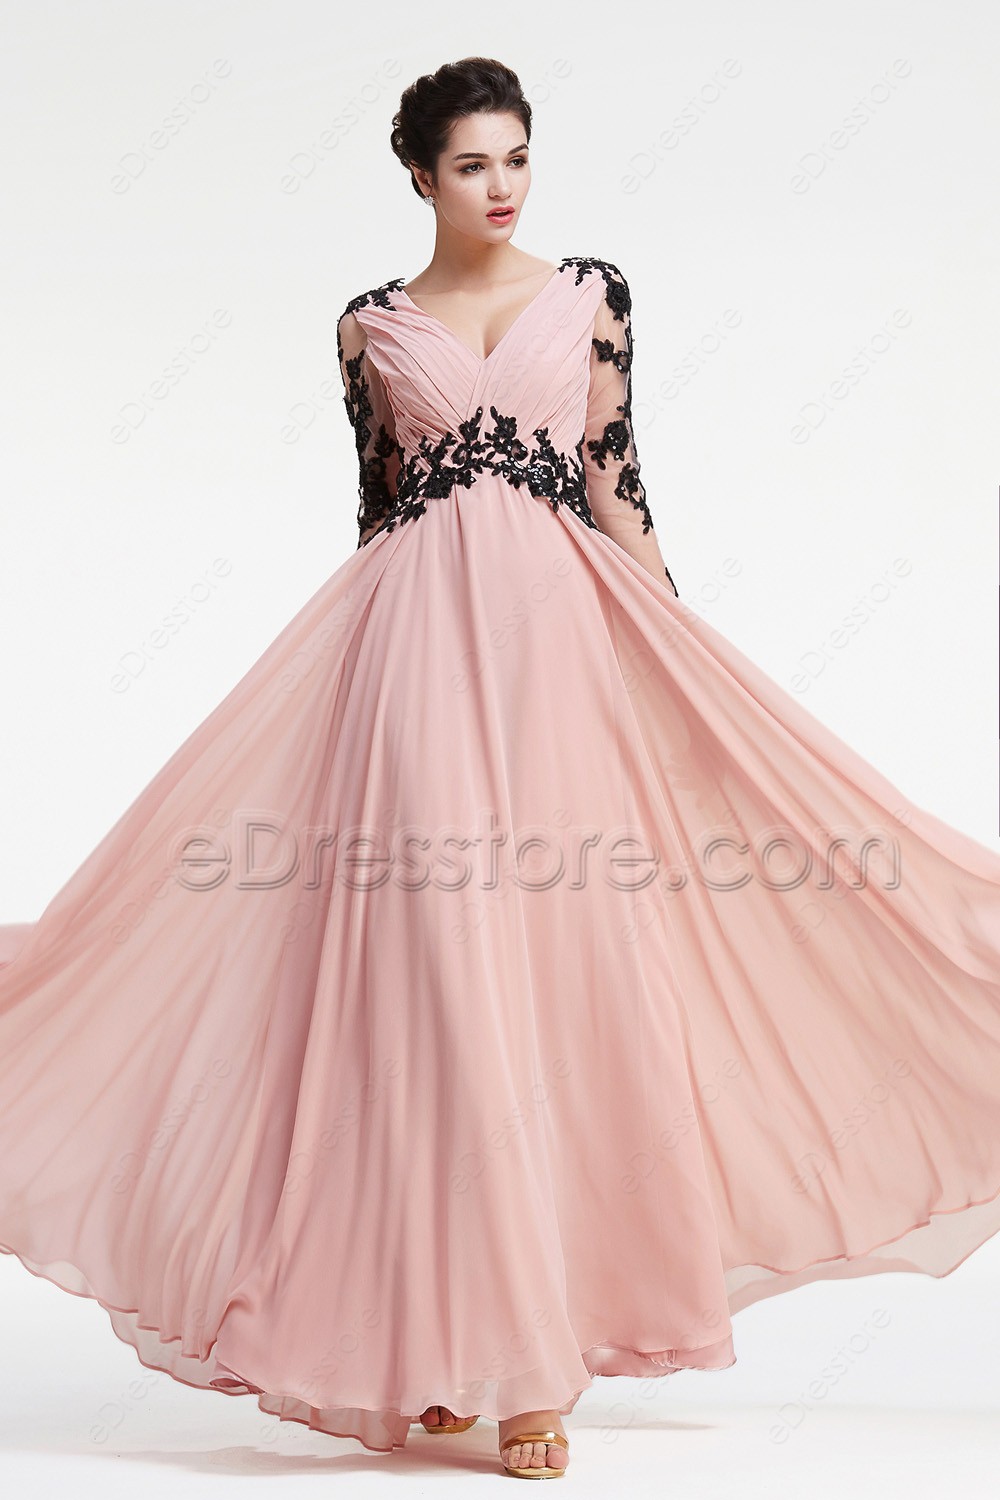 dusty rose floor length dress